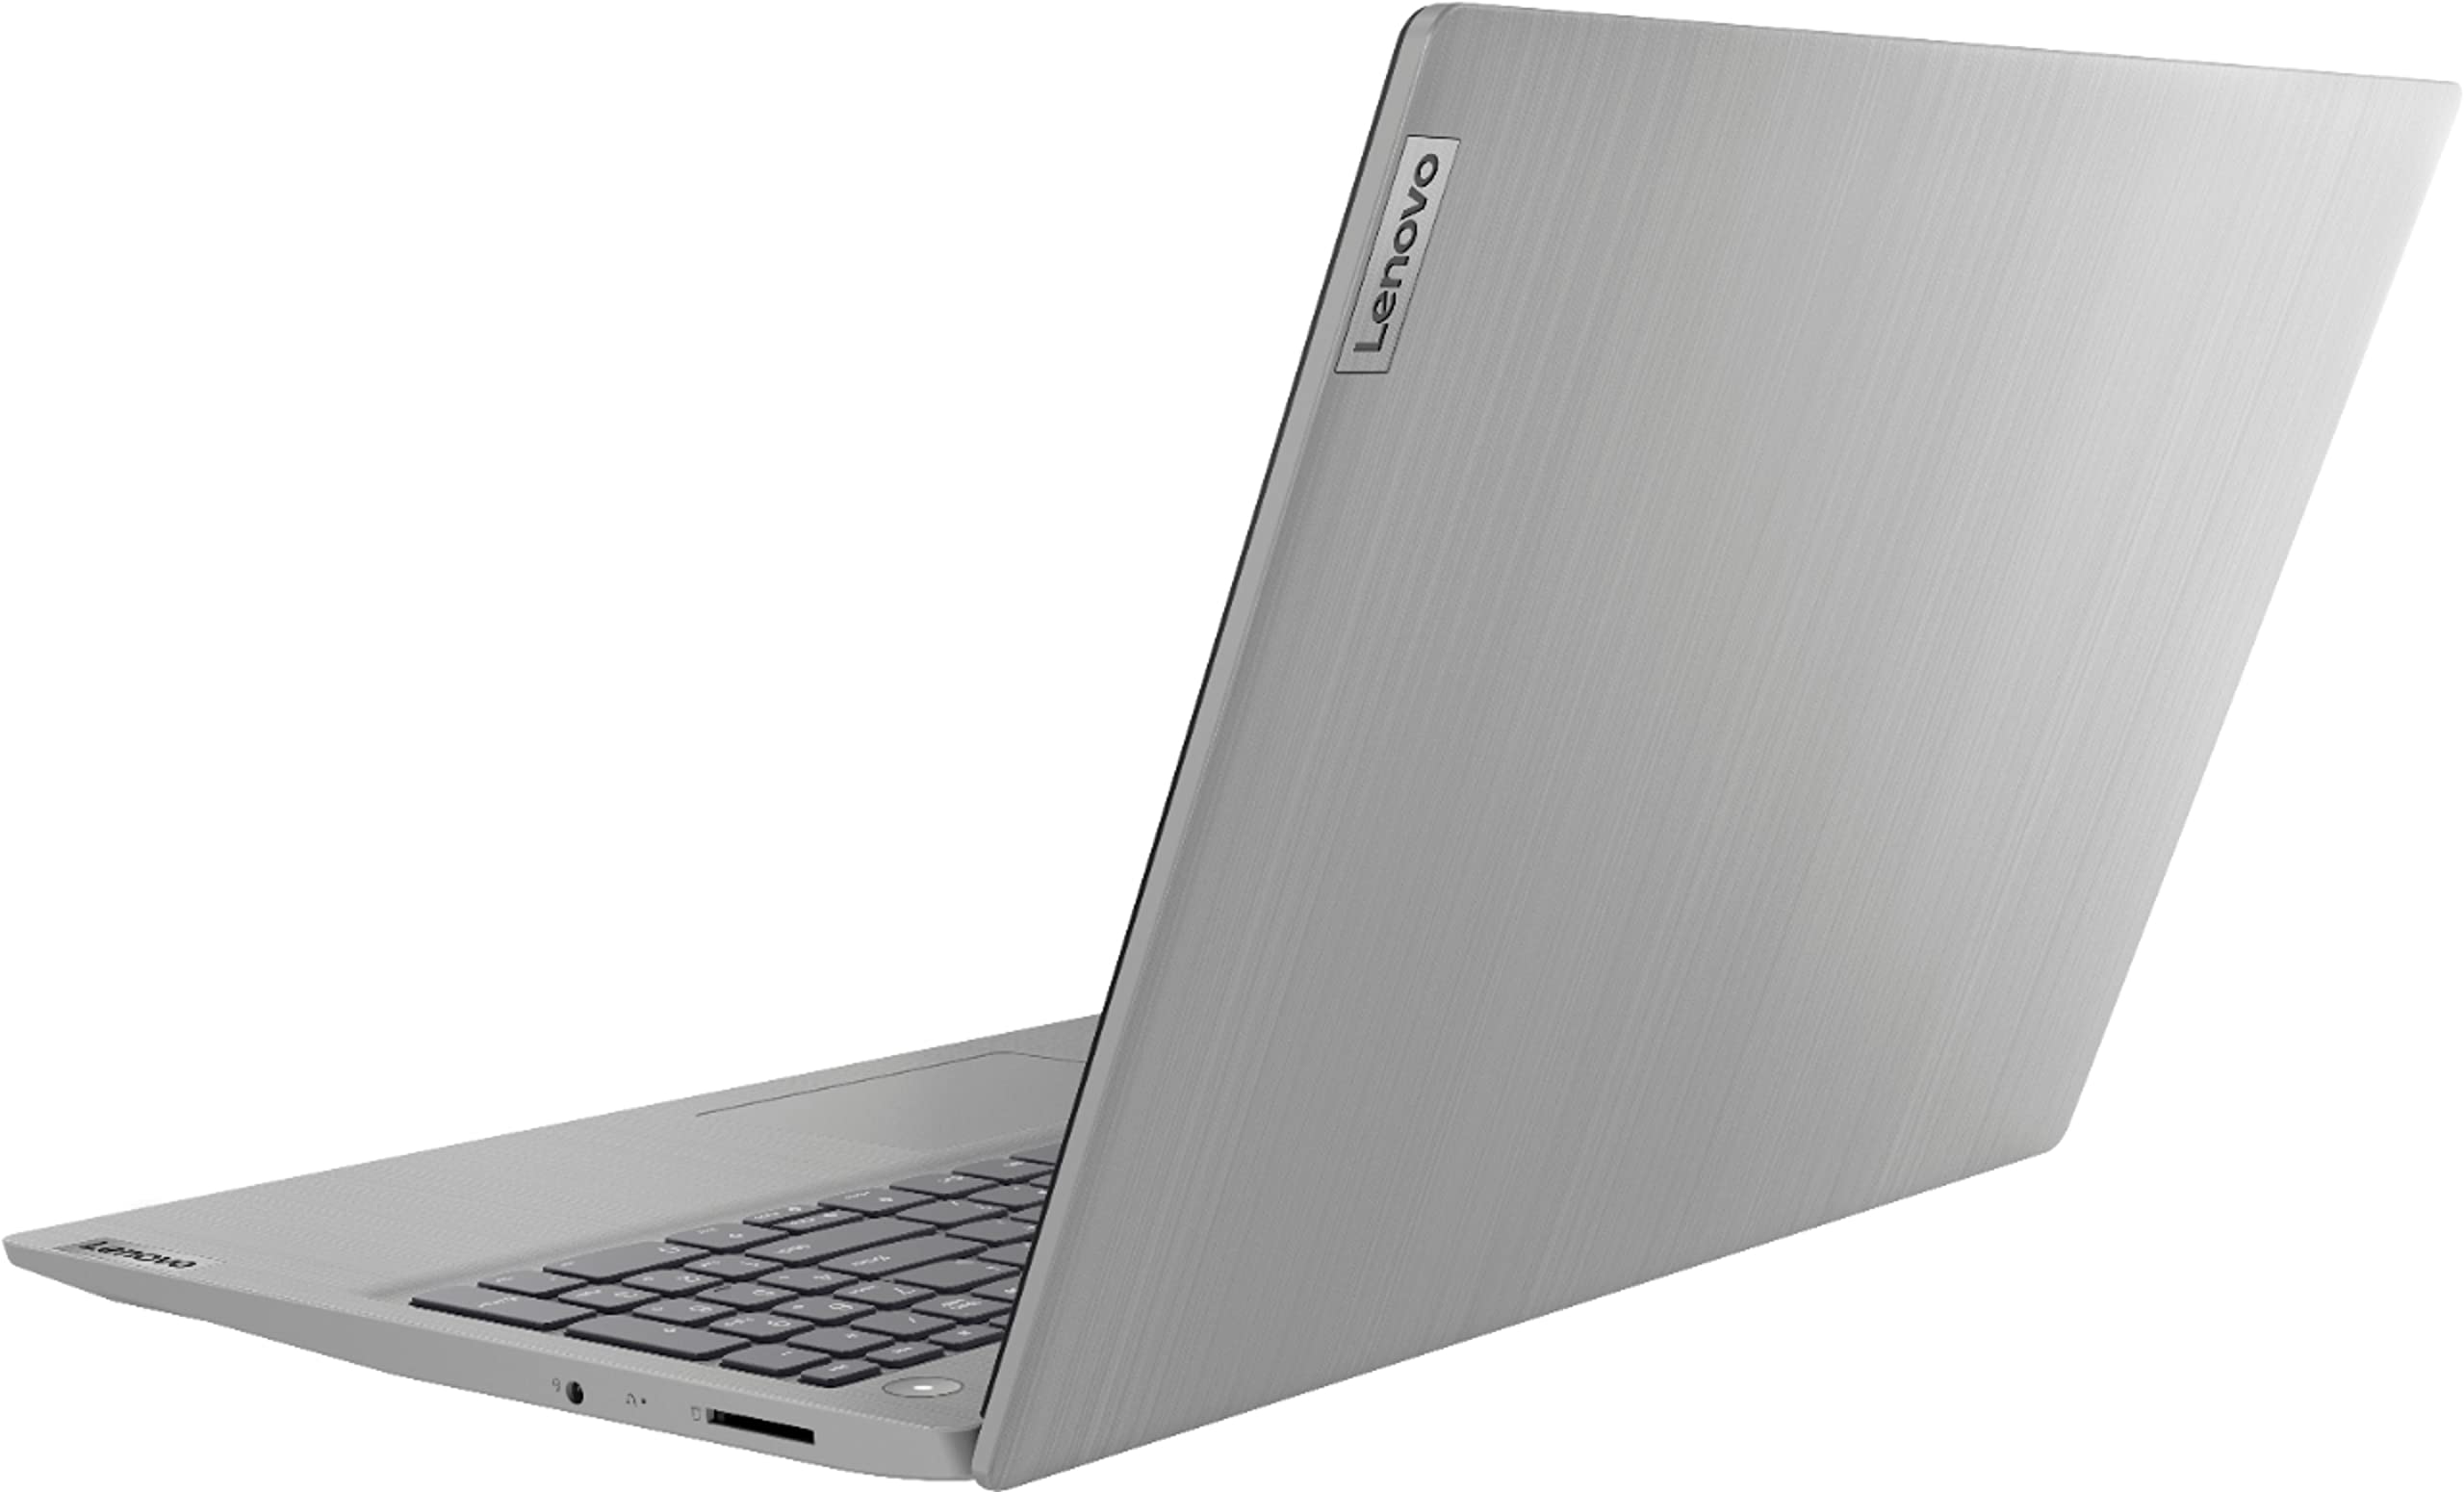 Lenovo 15 Touchscreen Business Laptop, 15.6" Full HD Touch Screen, Intel Quad-Core i5 11th Gen i5-1135G7, 20GB RAM, 512GB SSD Storage, WiFi 6, Windows 11, YSC Accesory